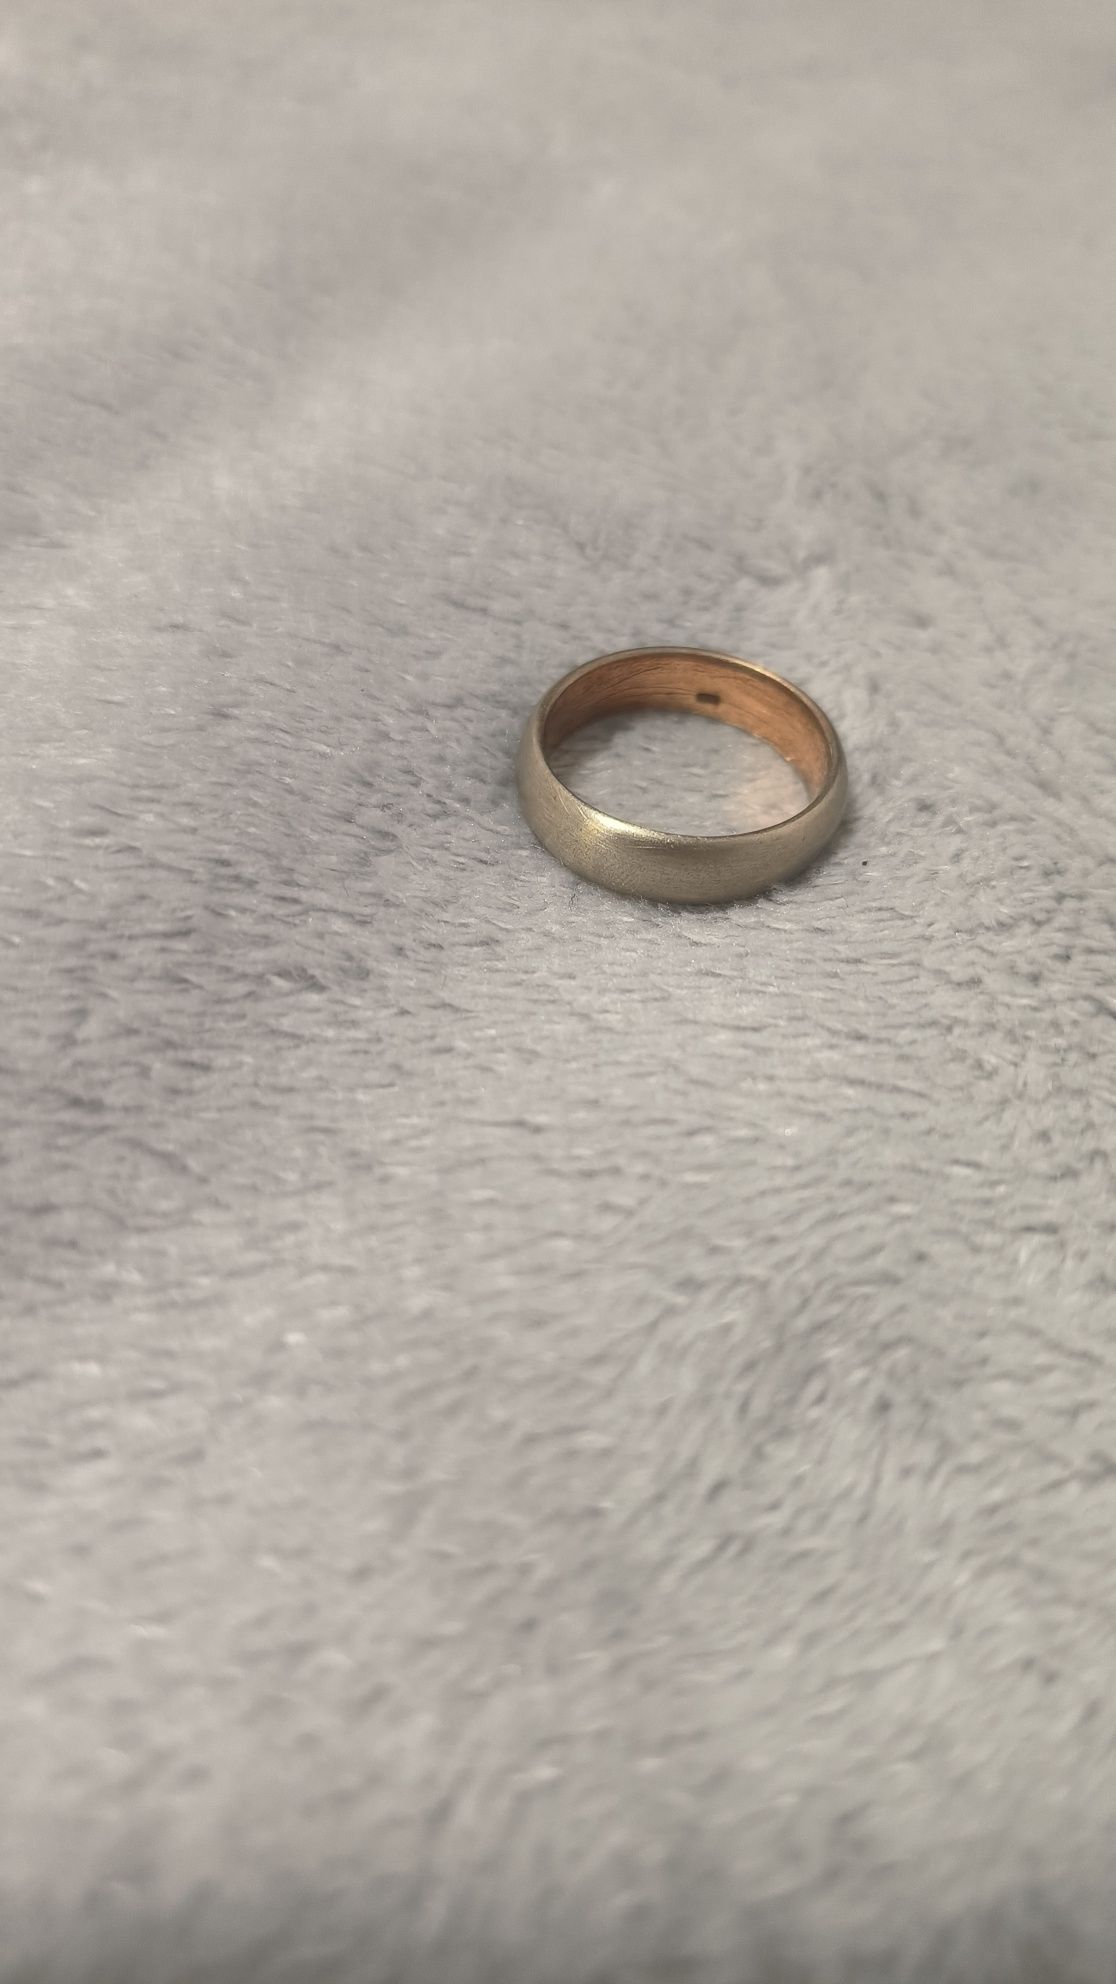 Кольцо серебро размер 16.5 или ( 6.2 см)